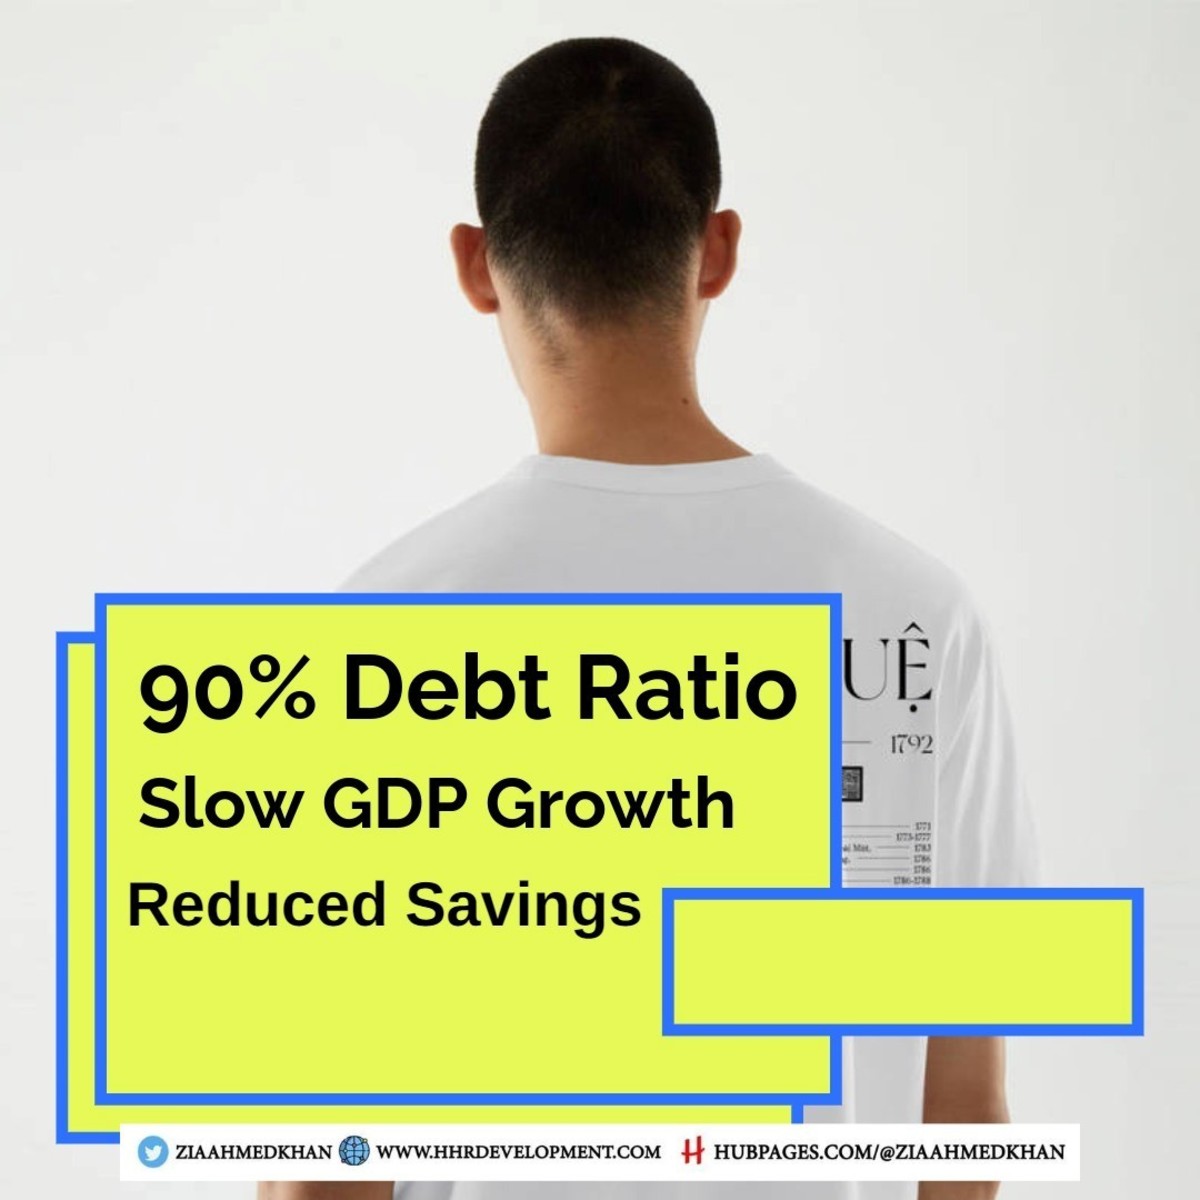 Debt to GDP Ratio